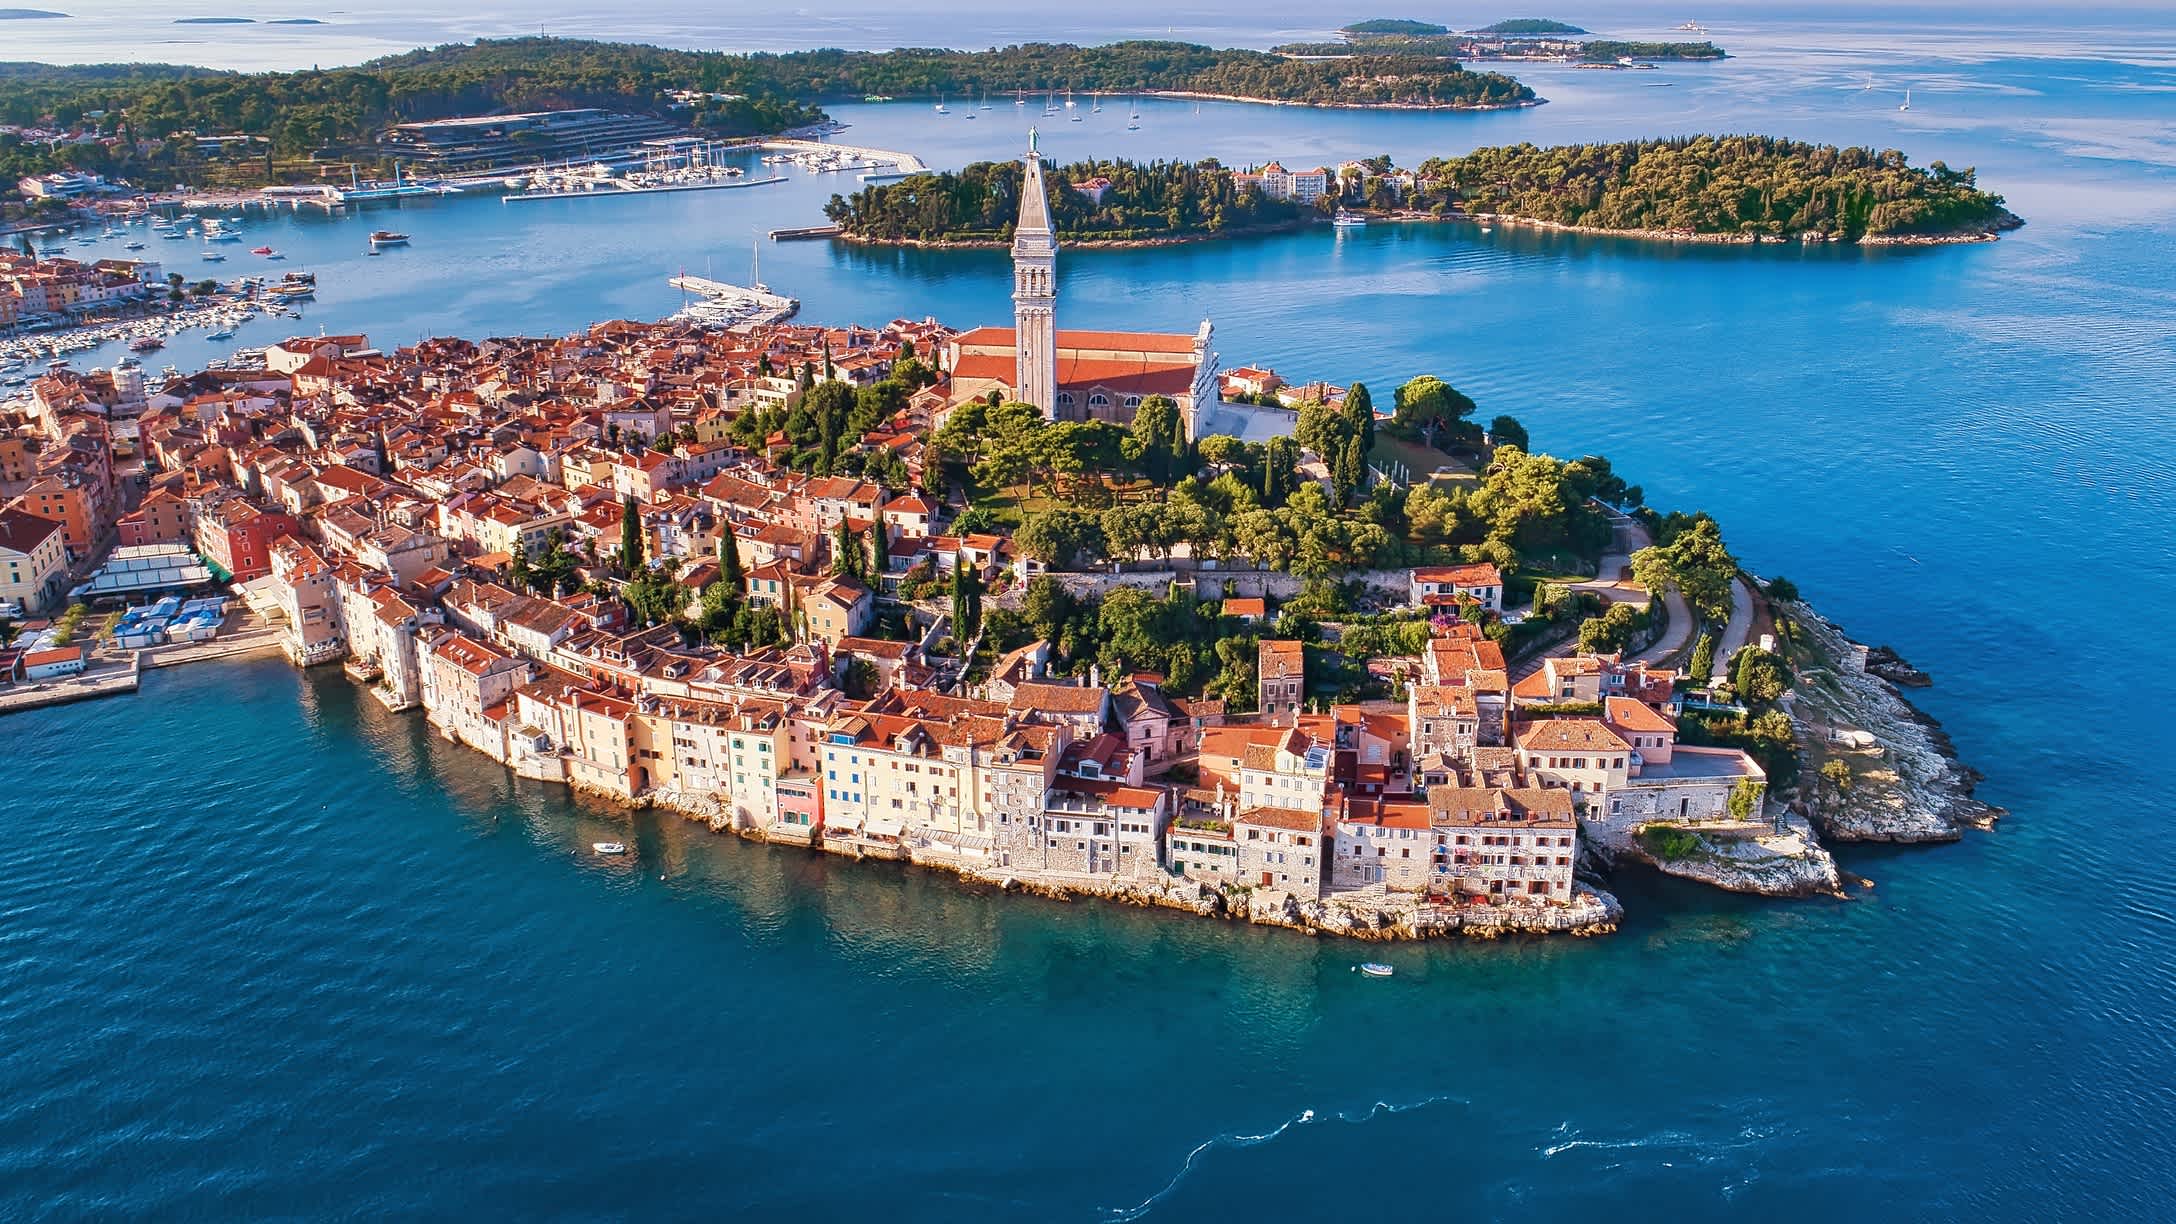 Luftaufnahme der Rovinj Altstadt in Kroatien.

